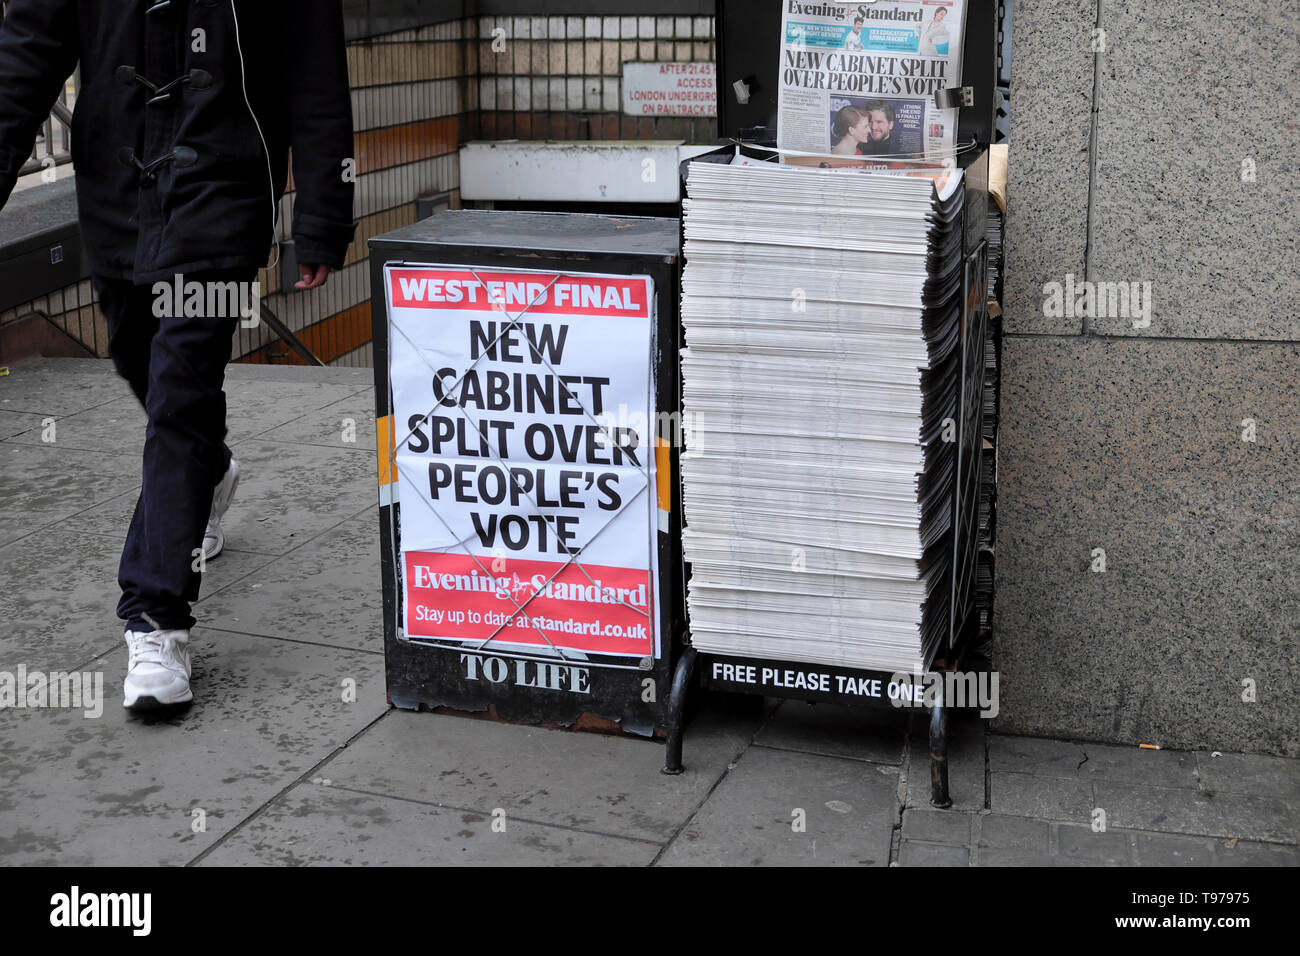 Evening Standard newspaper headline on poster 'New Cabinet Split Over People's Vote'  Westminster London England UK  KATHY DEWITT Stock Photo